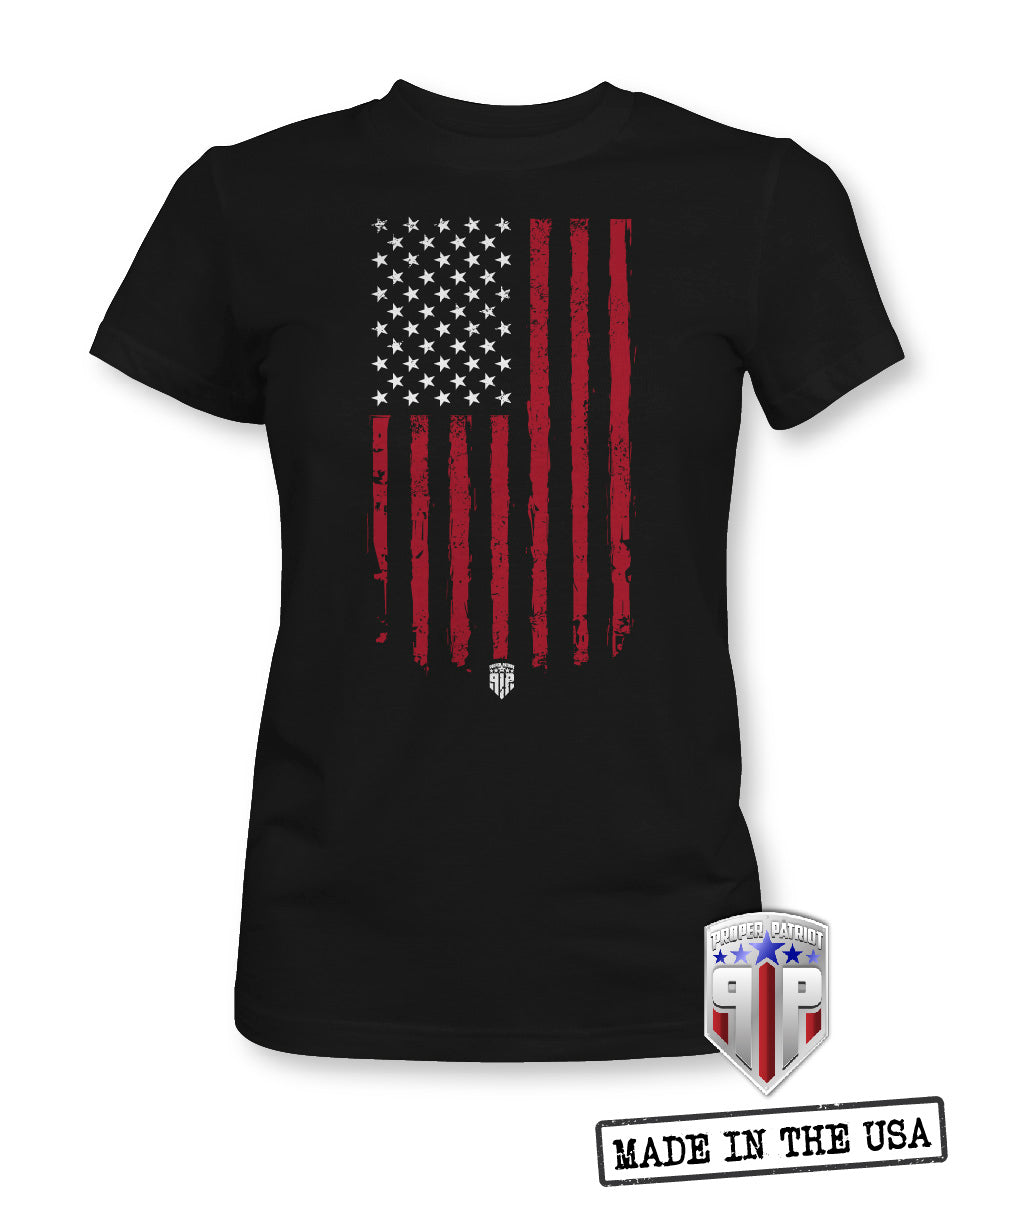 Tattered American Flag - USA Apparel Shirts - Women's Patriotic Shirts - Proper Patriot